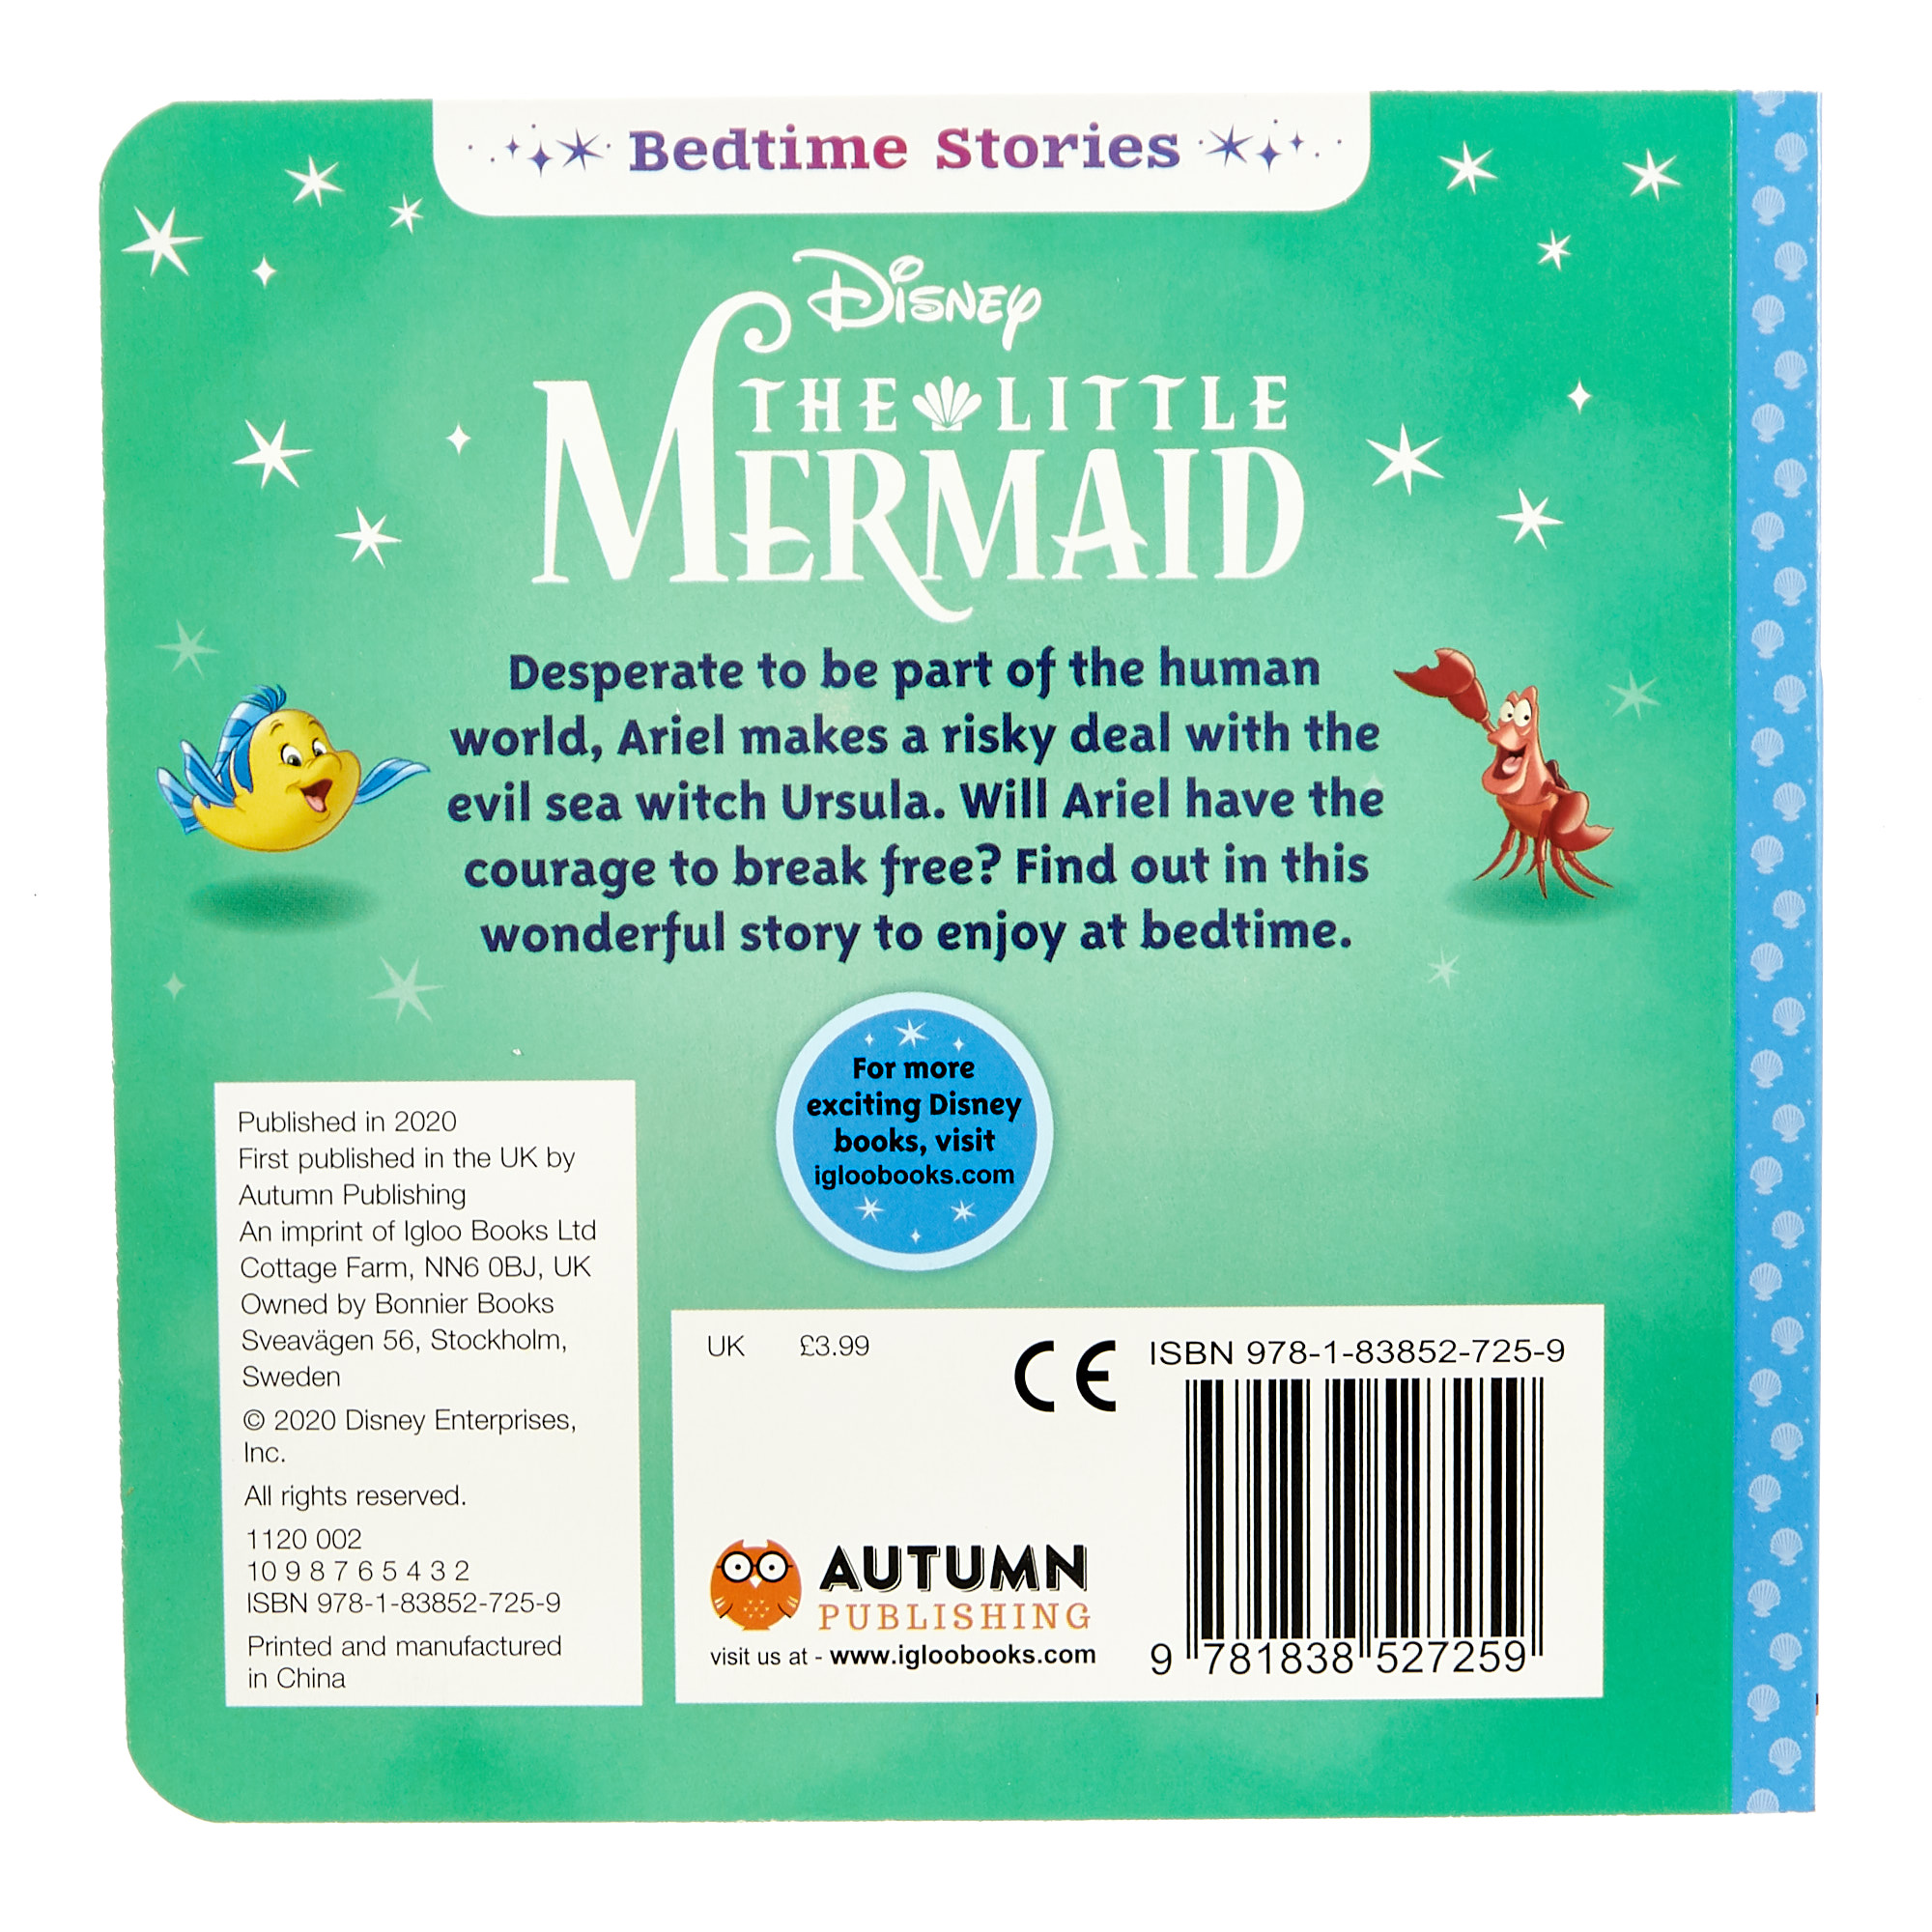 Disney Bedtime Stories - The Little Mermaid Book